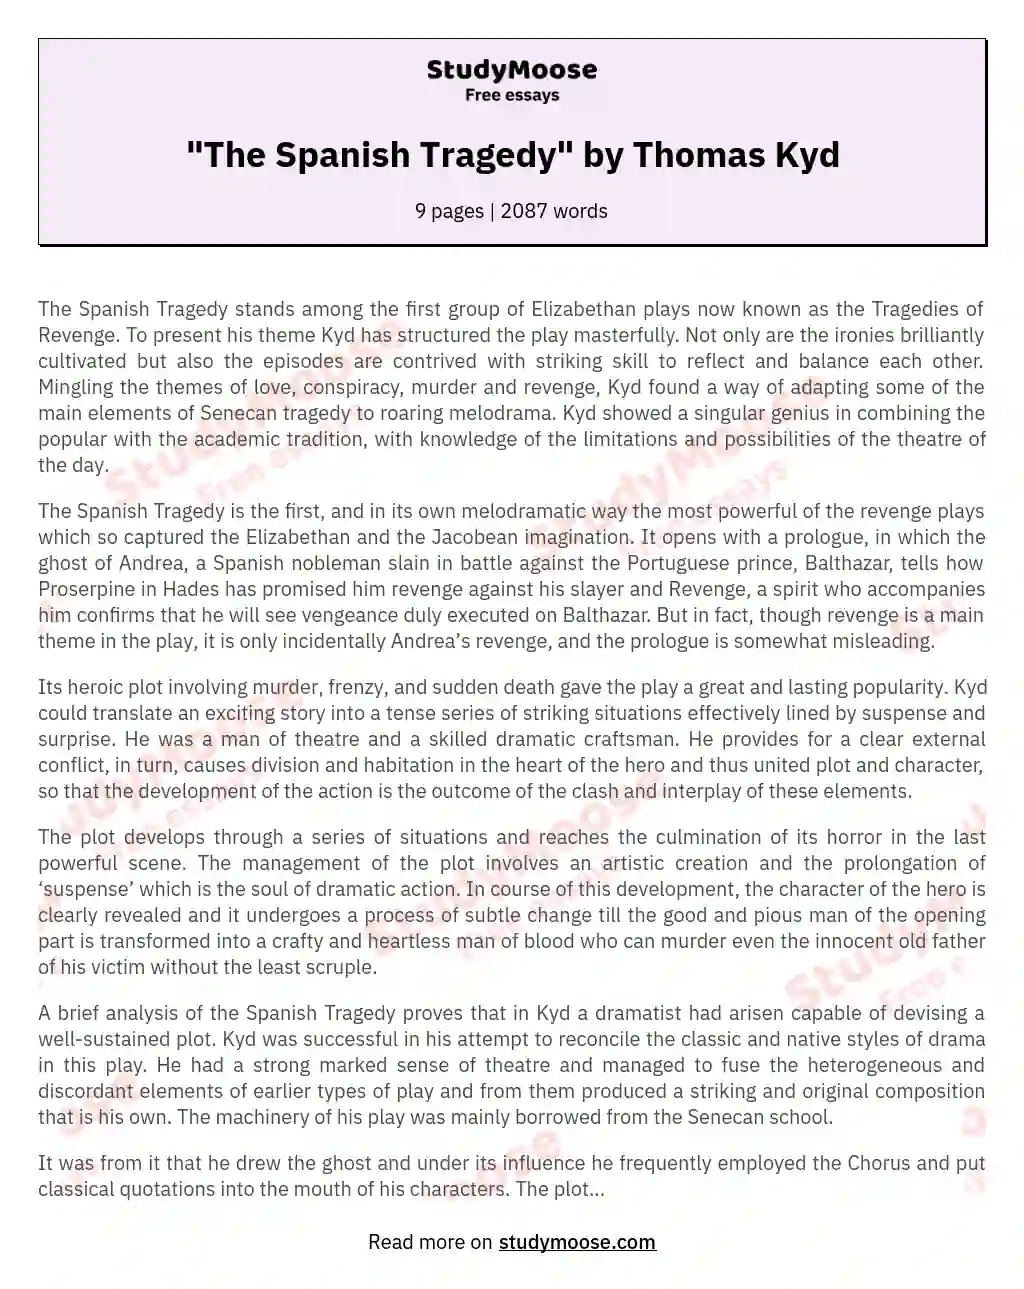 "The Spanish Tragedy" by Thomas Kyd essay